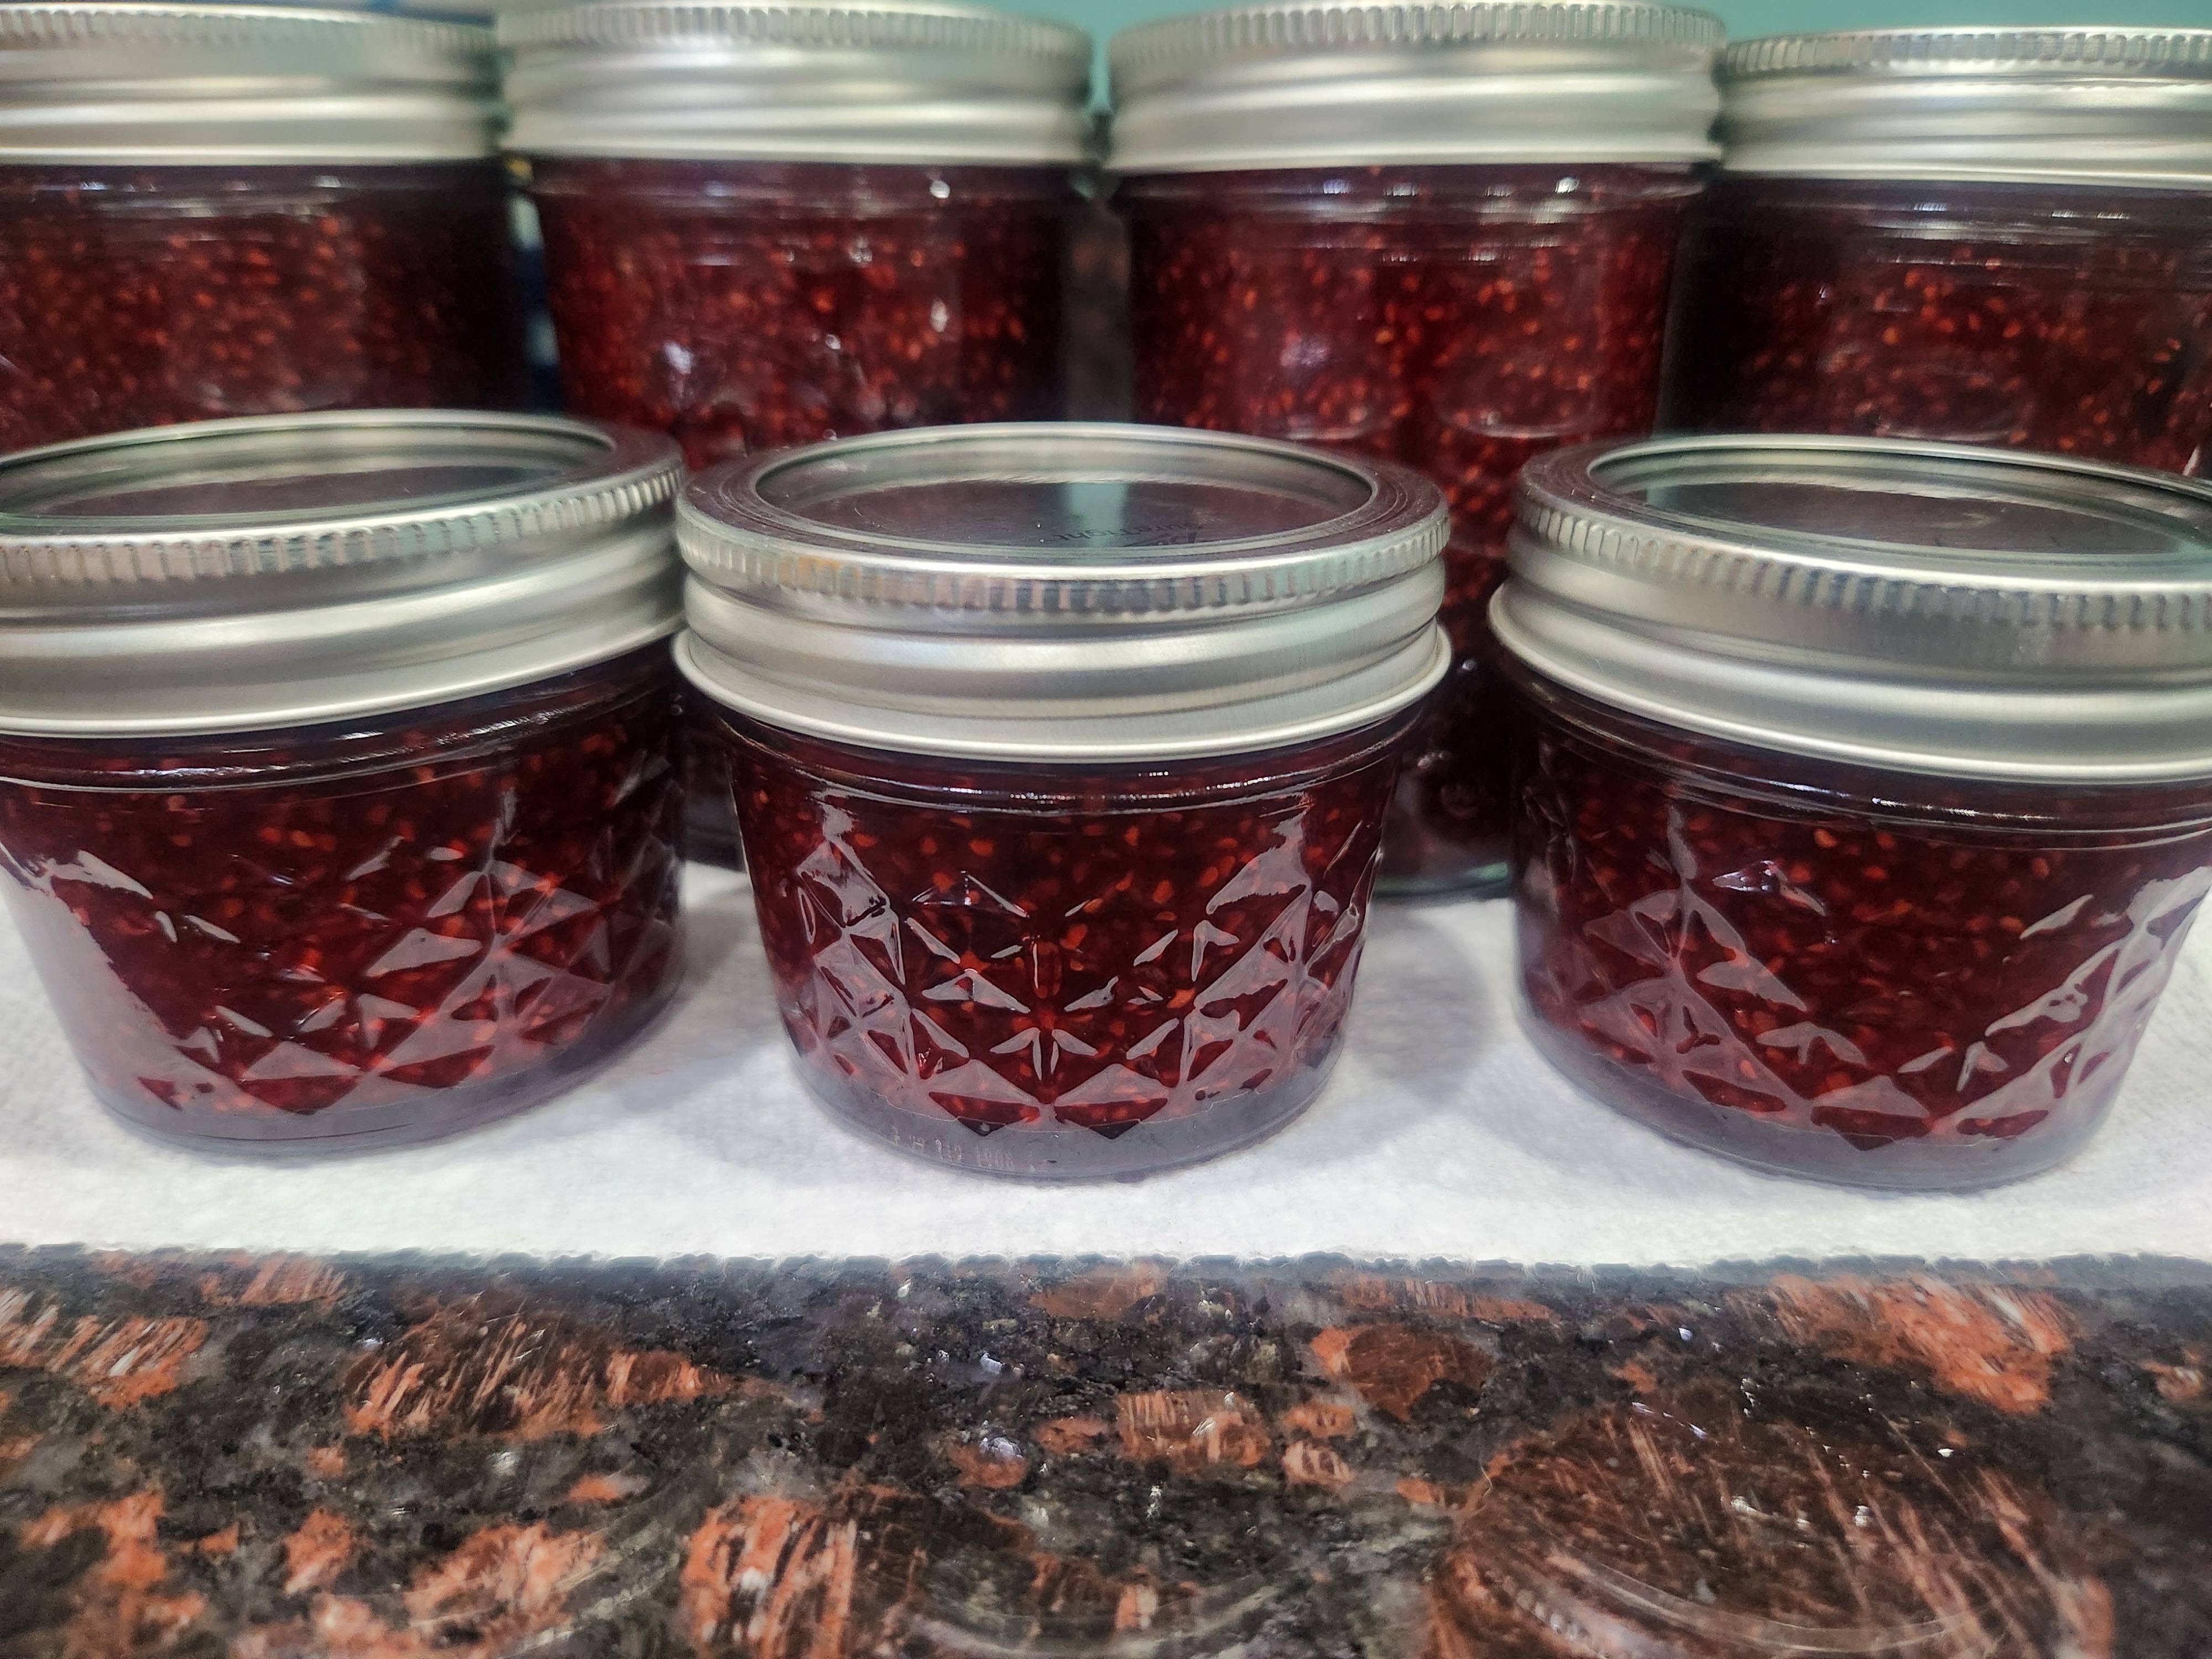 Lots of jam!